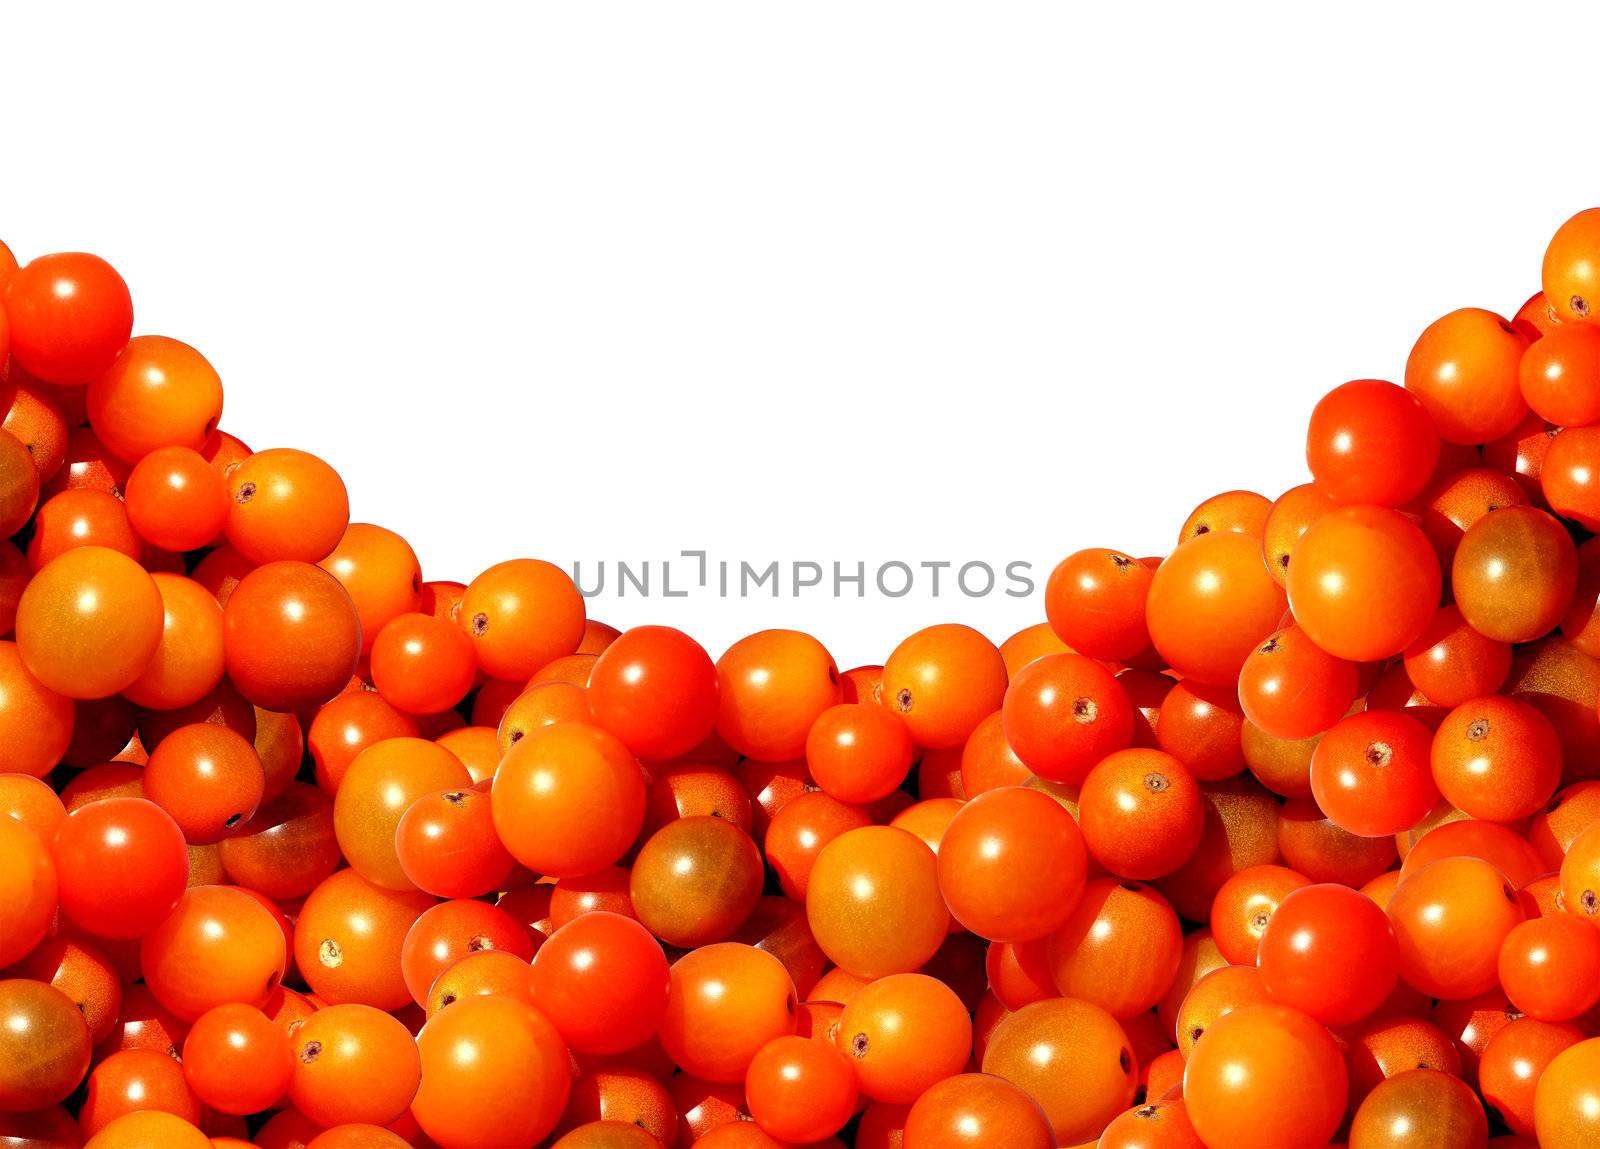 Cherry Tomato Border Design by brightsource